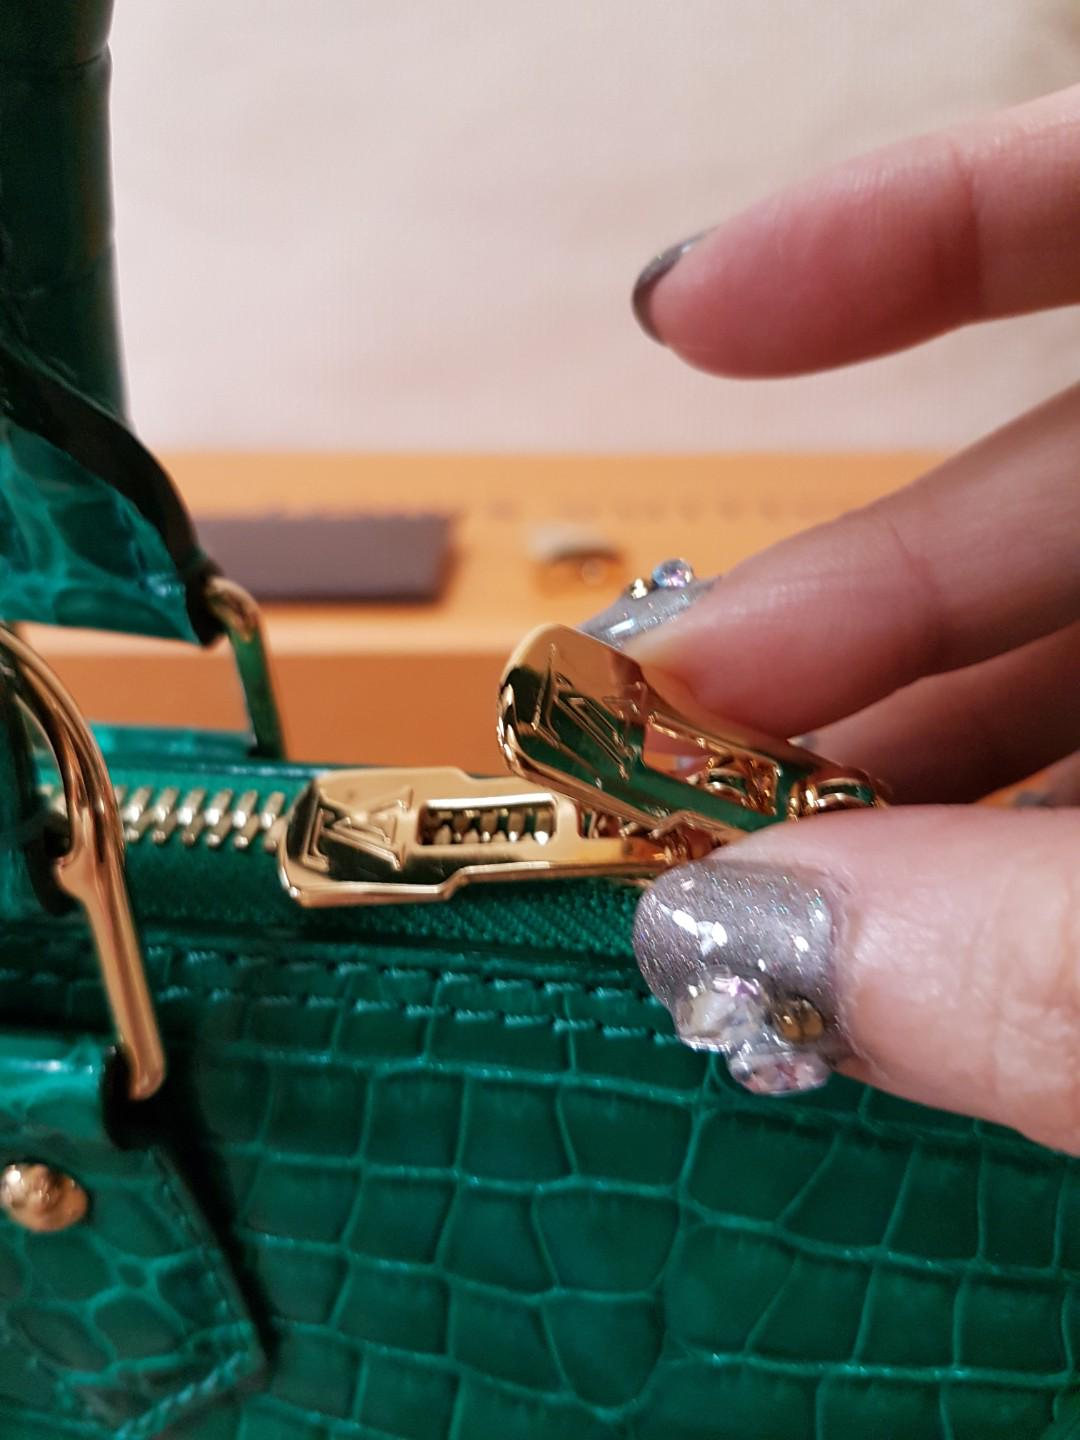 Alma bb crocodile handbag Louis Vuitton Green in Crocodile - 32555620